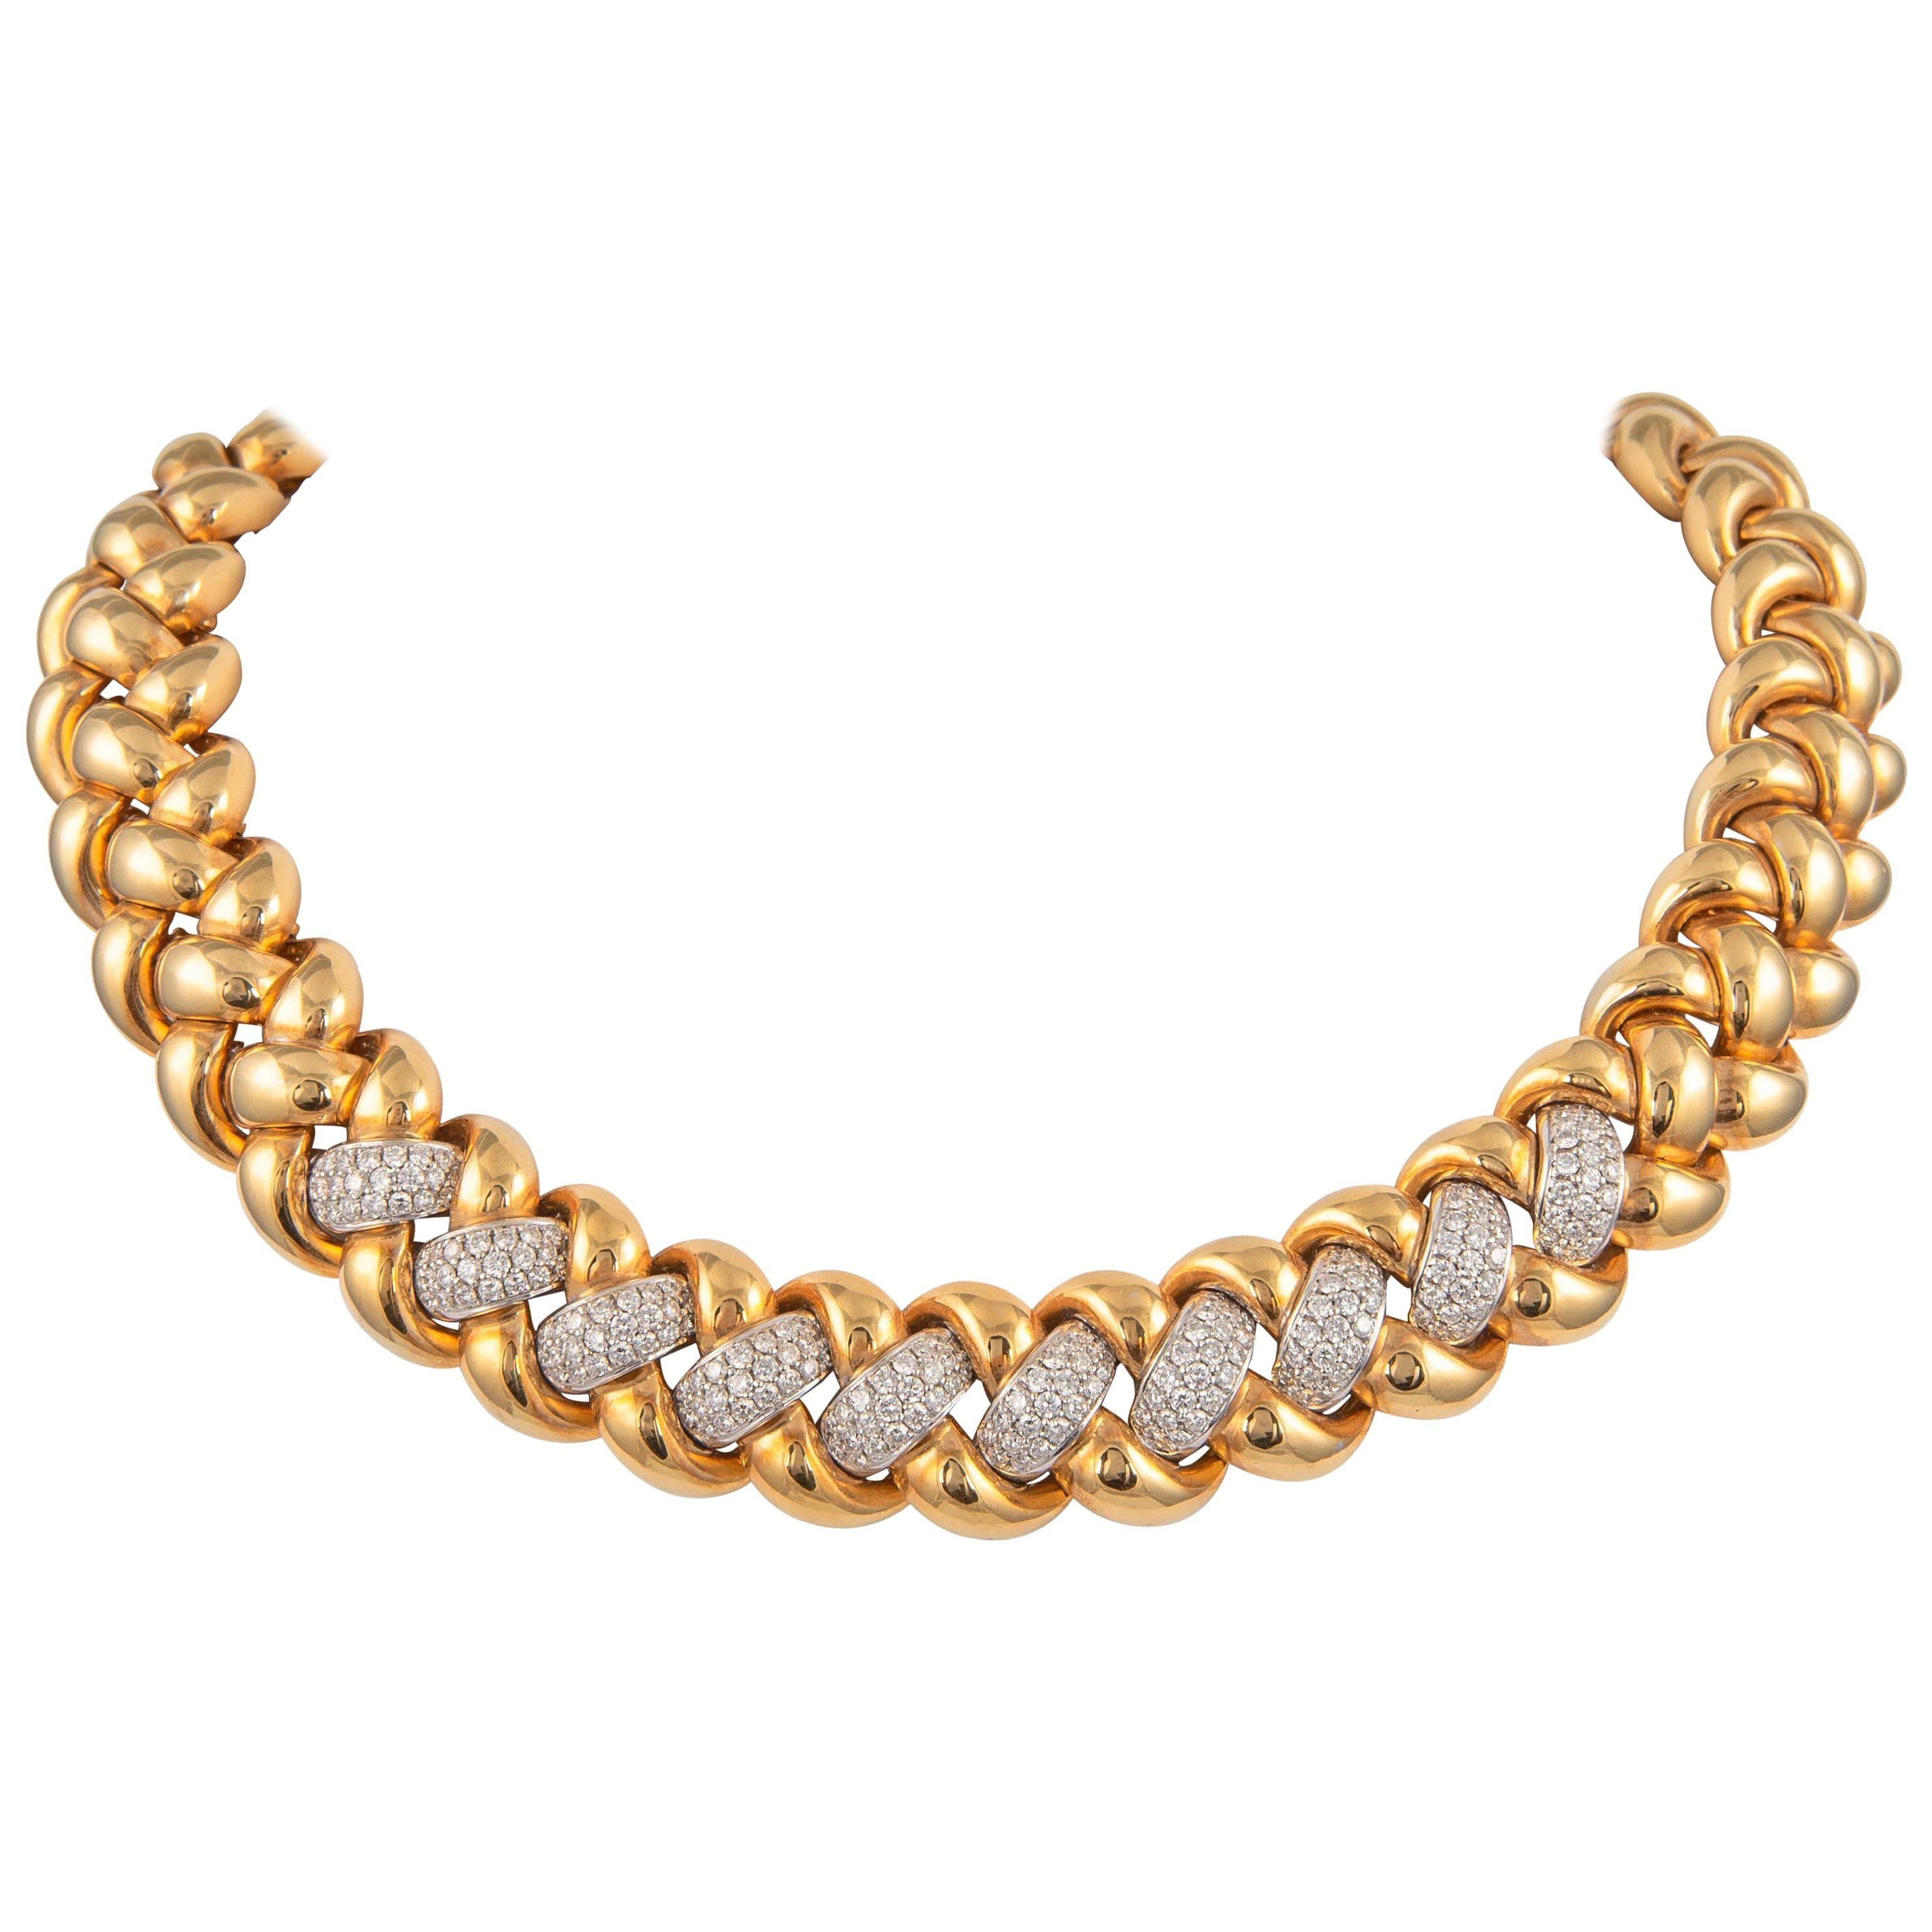 Vintage Retro Style 11 Carat Diamond and 18 Karat Yellow Gold Necklace 209.43gr